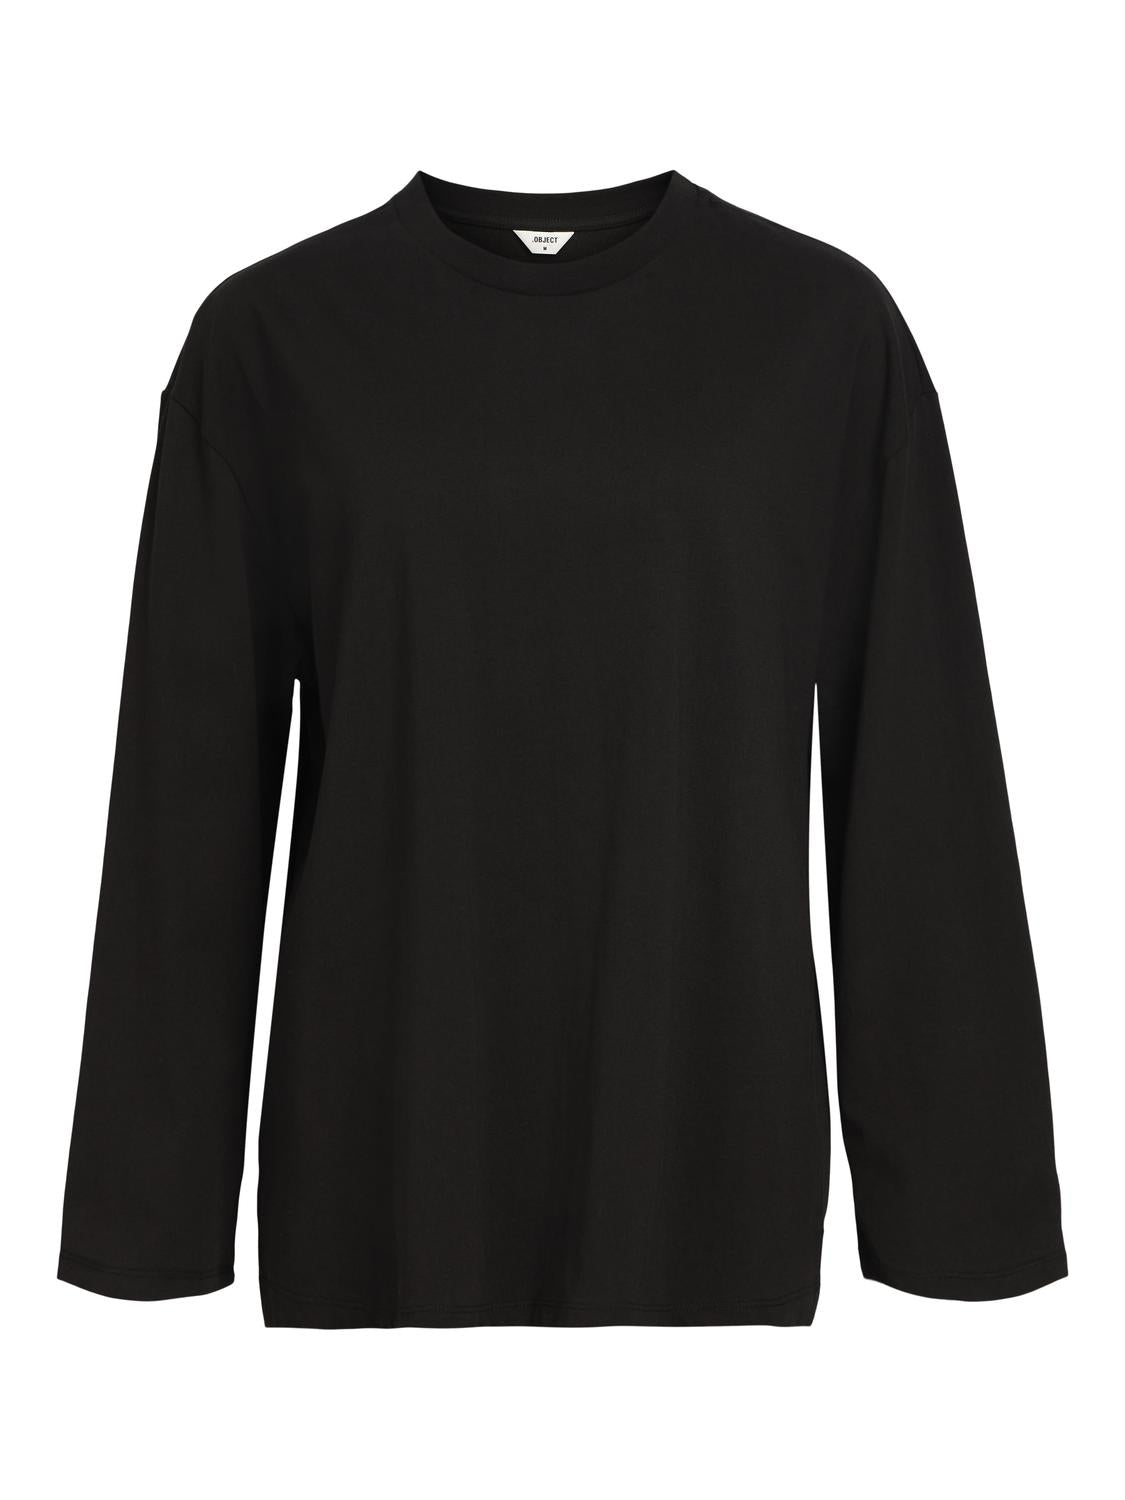 OBJGIMA T-Shirt - Black